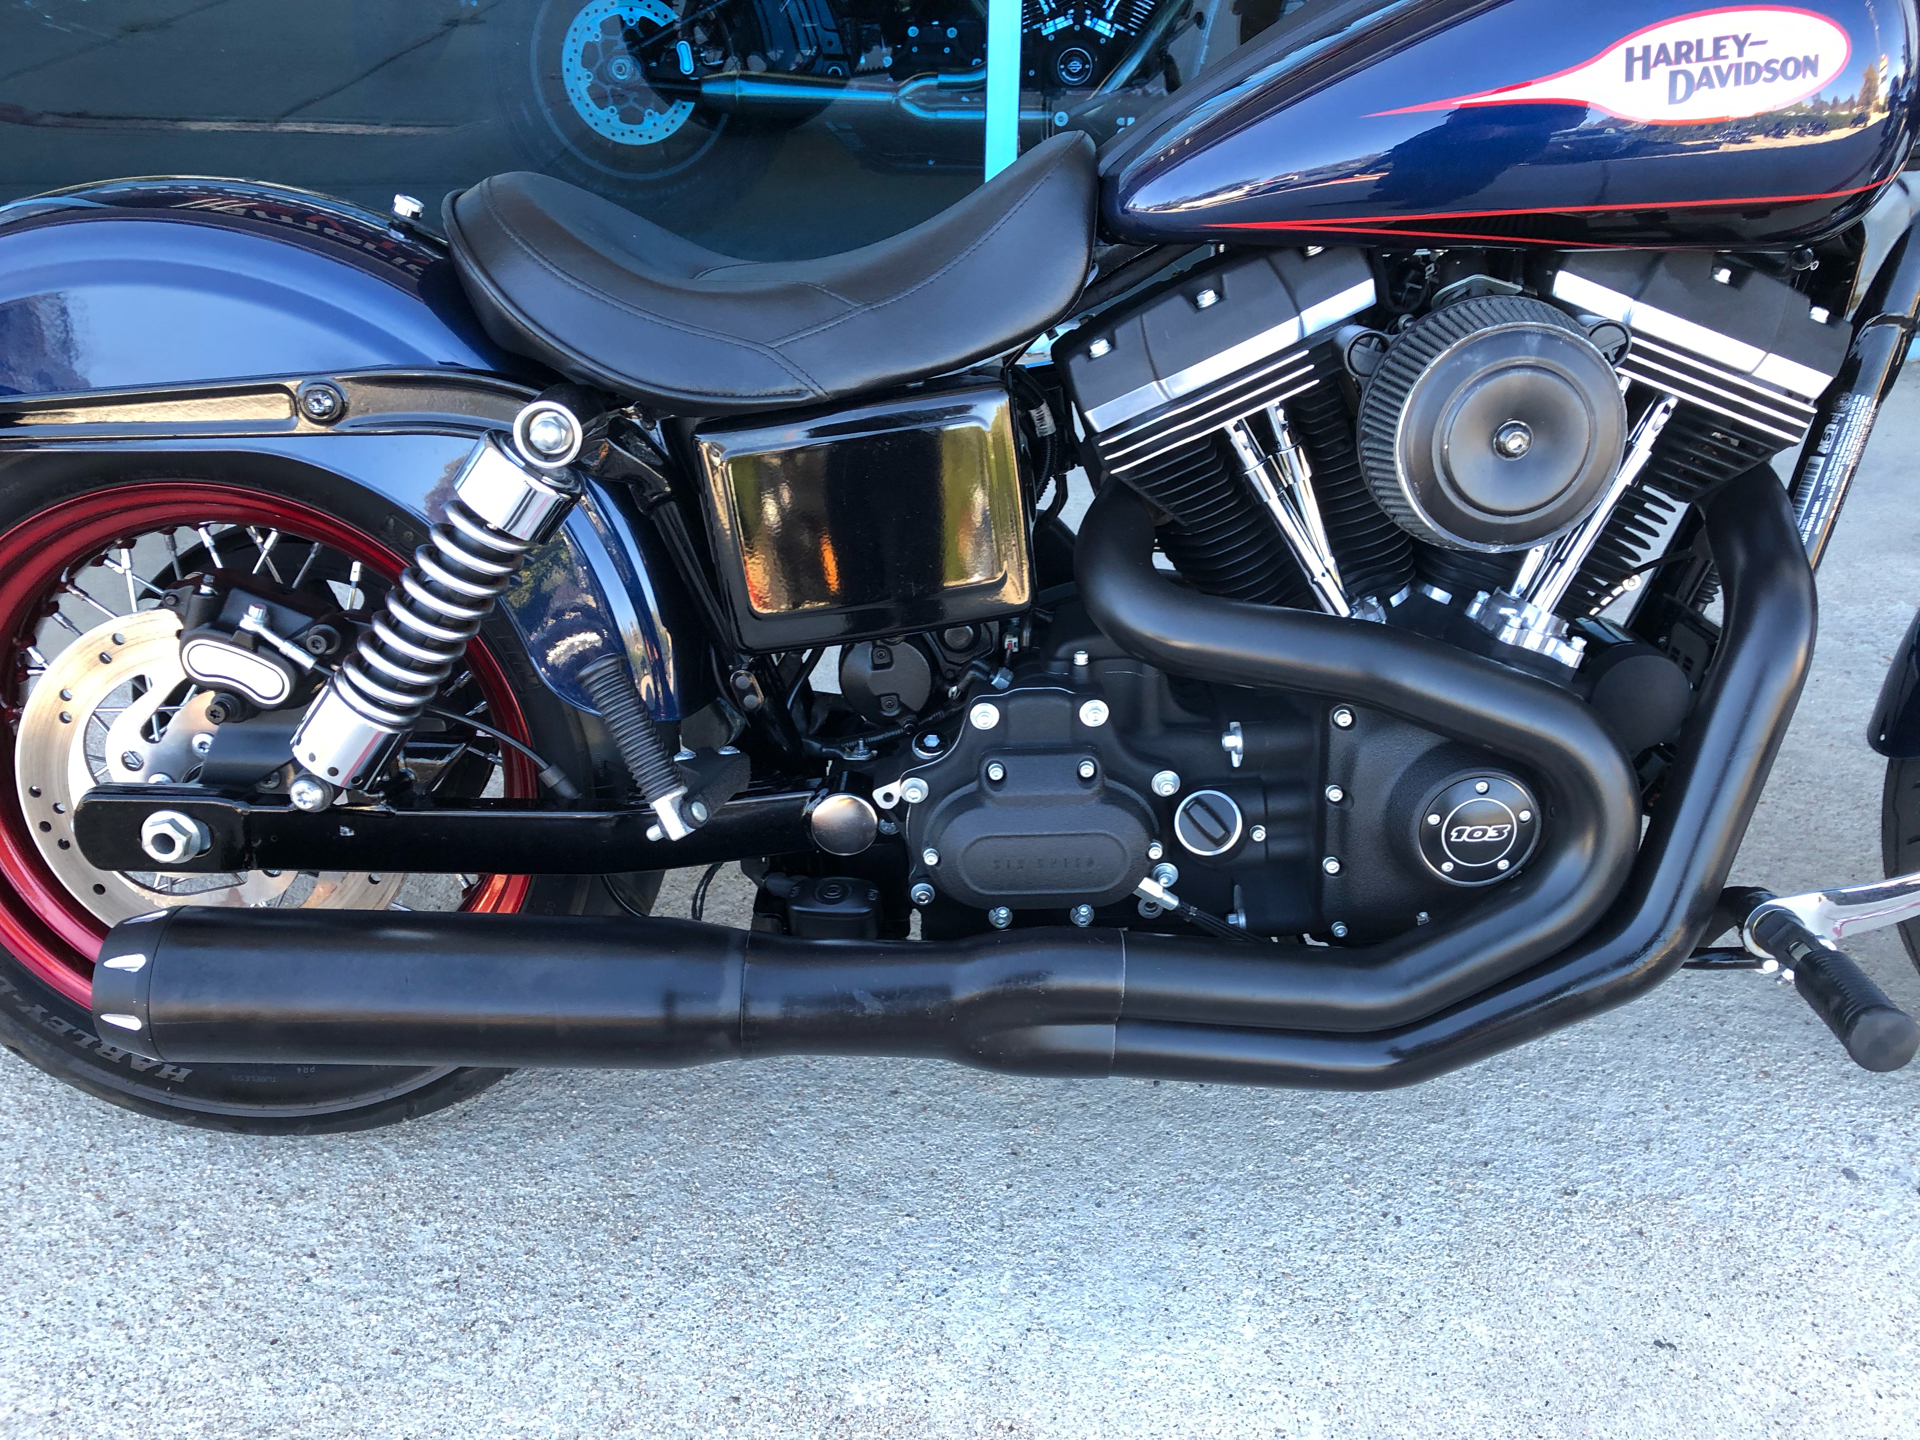 2013 Harley-Davidson Dyna® Street Bob® in Temecula, California - Photo 7